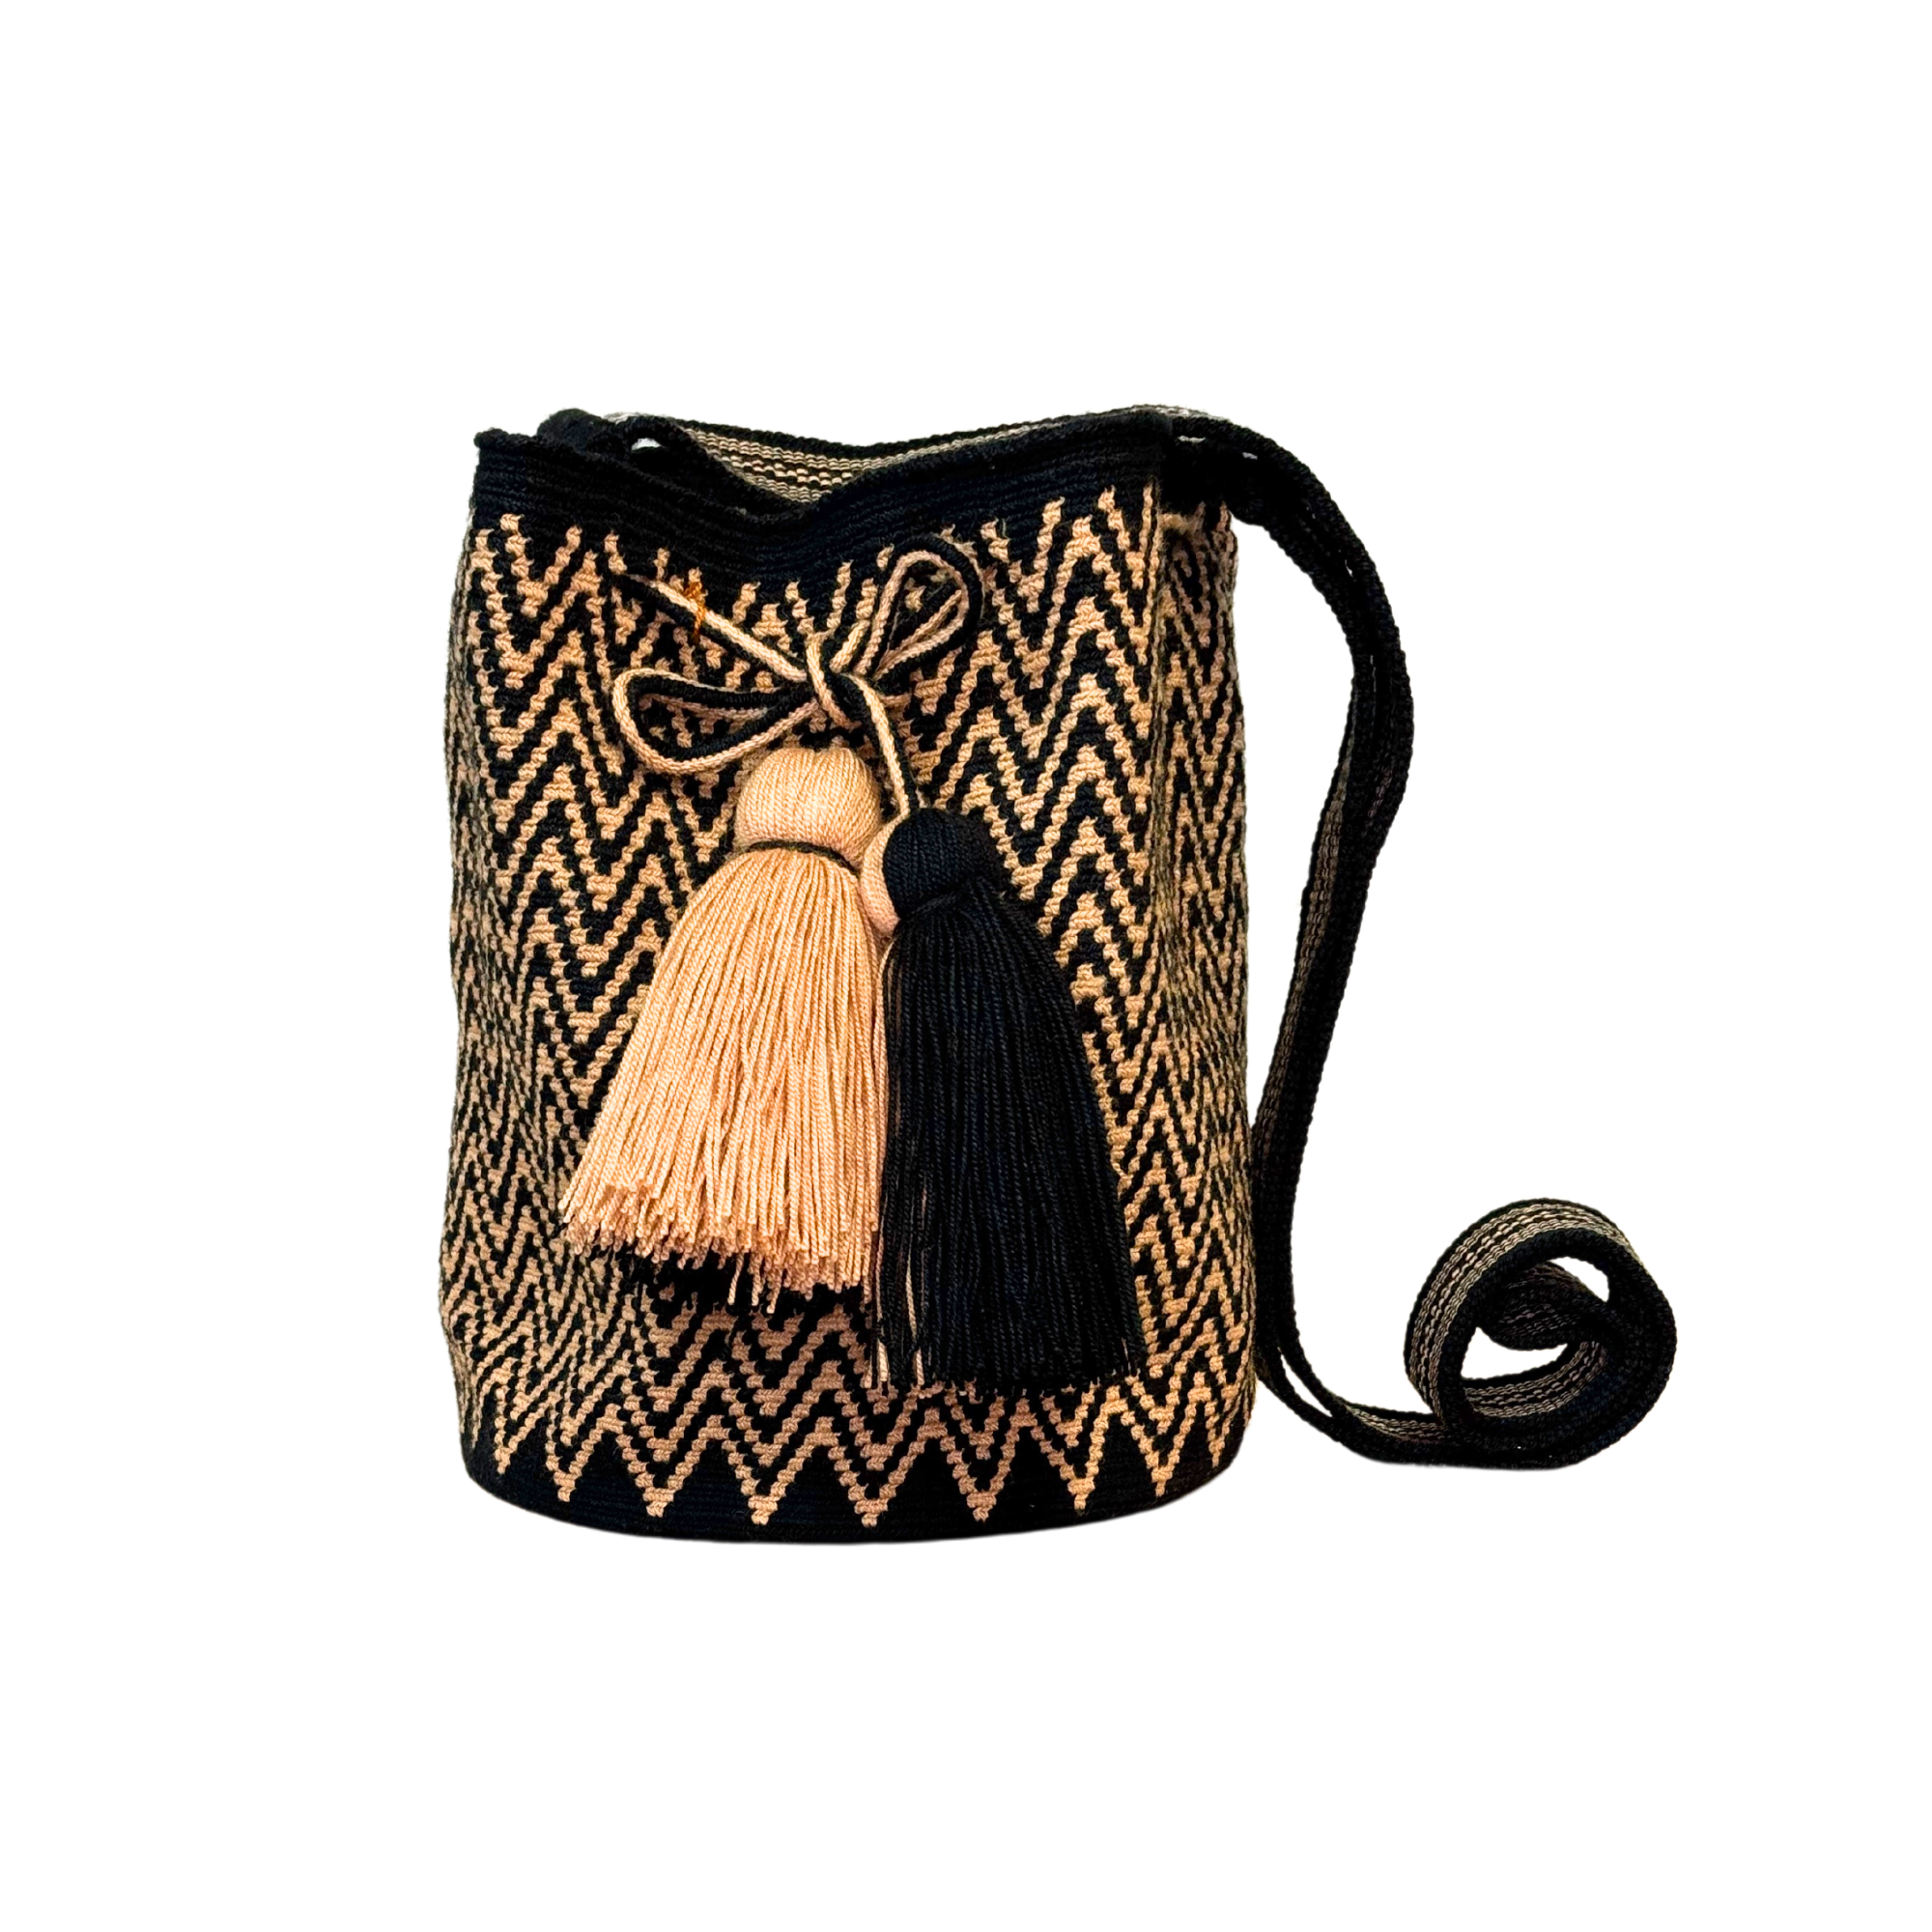 Wayuu mochila bag | Medium Traditional | Brown and black zig zag